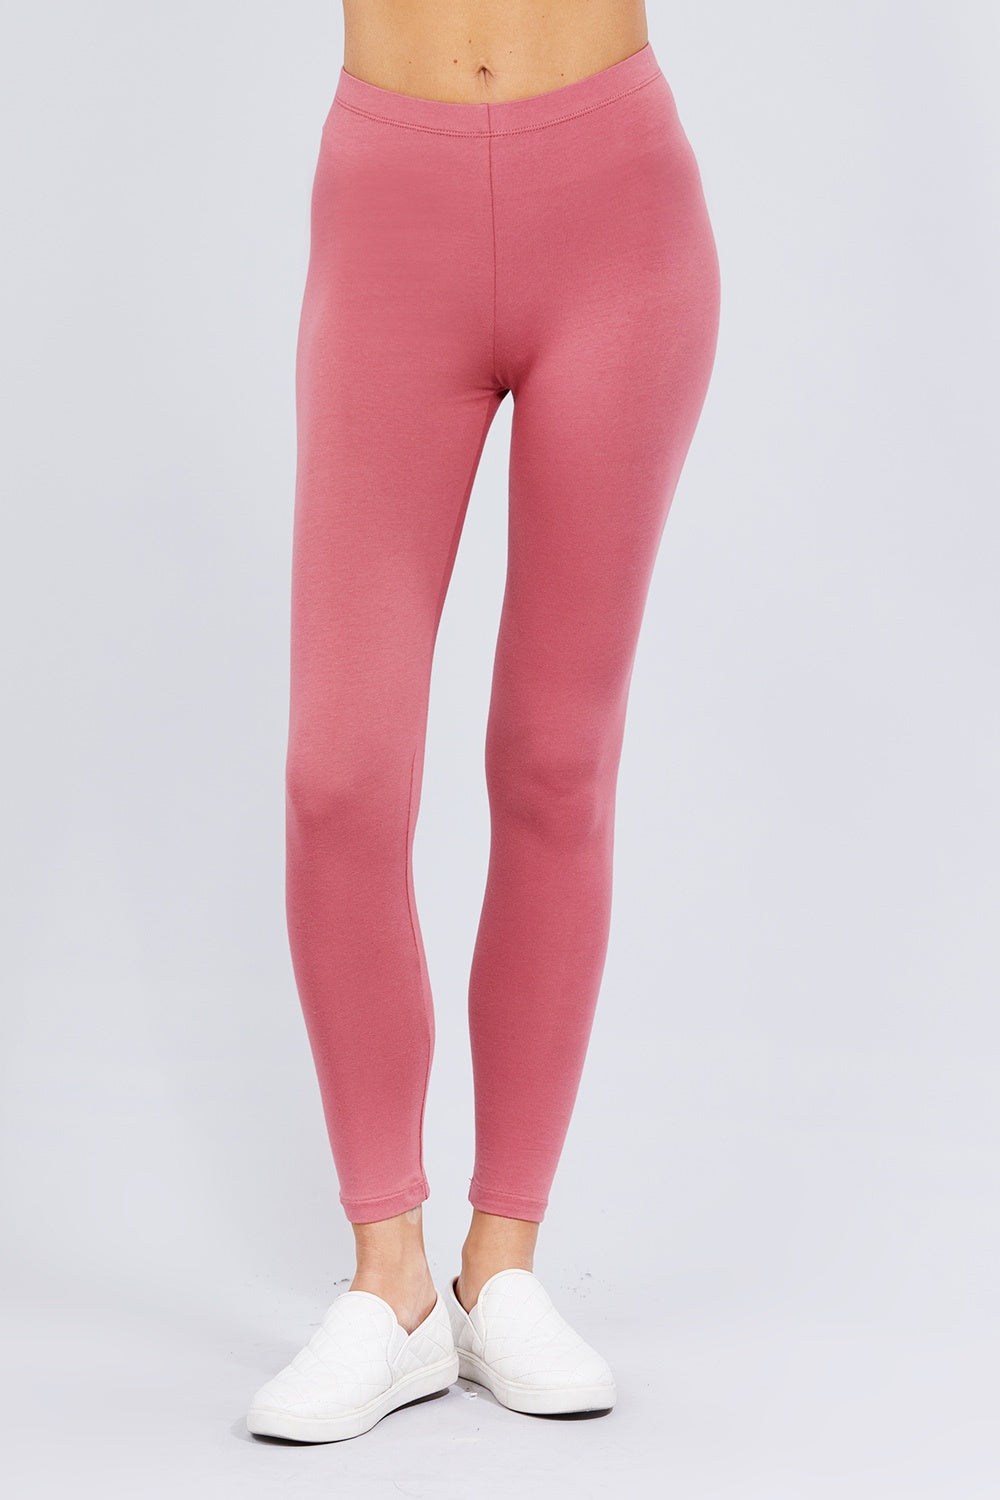 Cotton Spandex Jersey Long - Pink / S Pants Girl Code